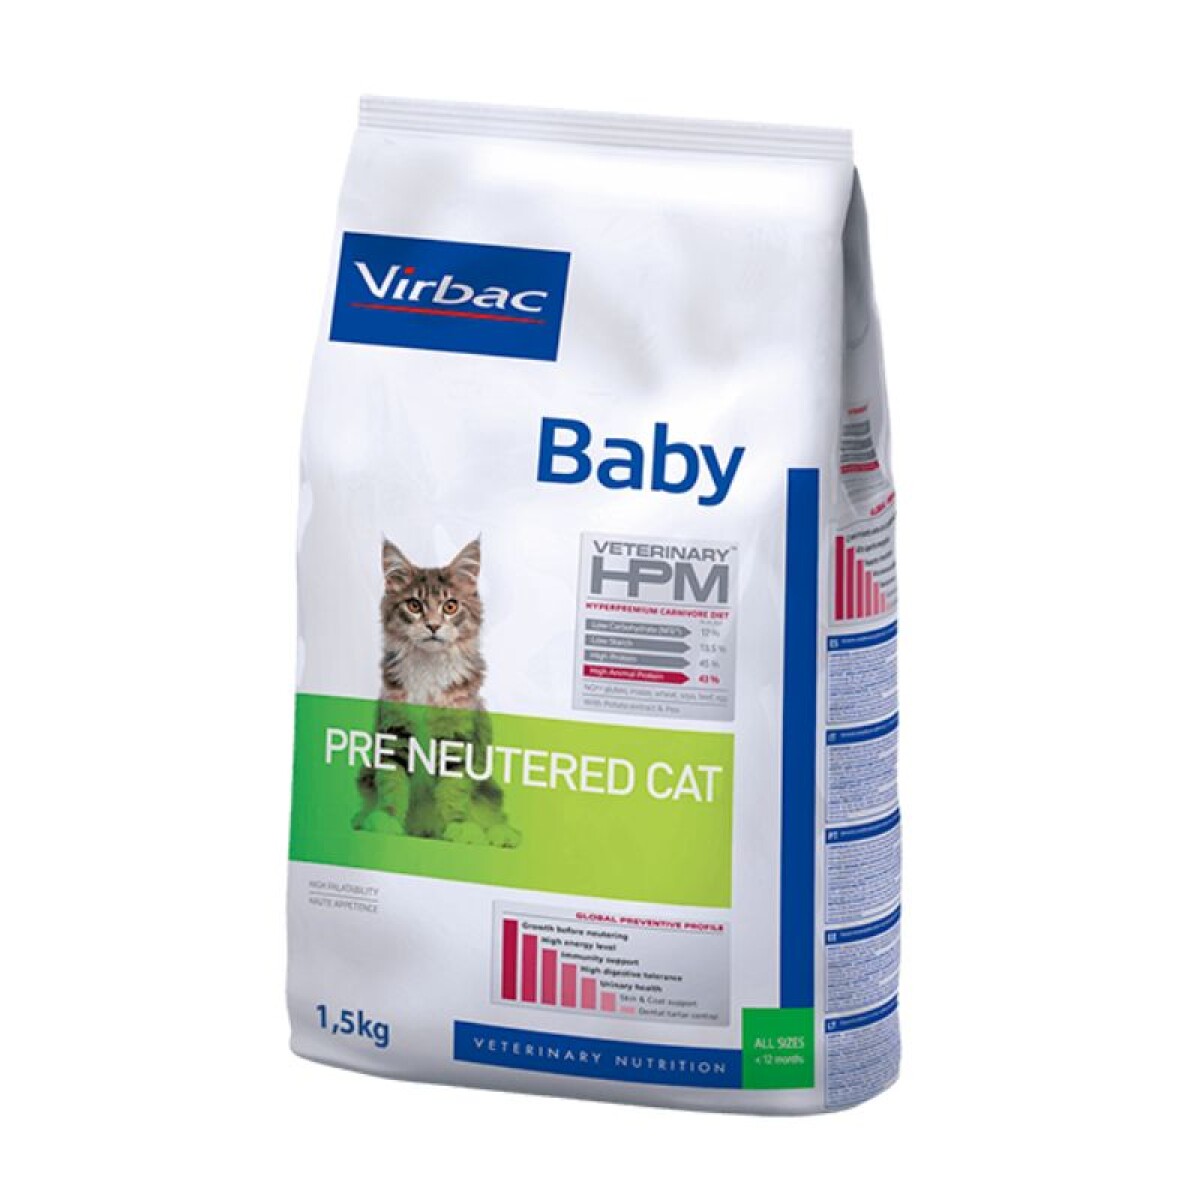 HPM CAT BABY 1.5KG - Hpm Cat Baby 1.5kg 